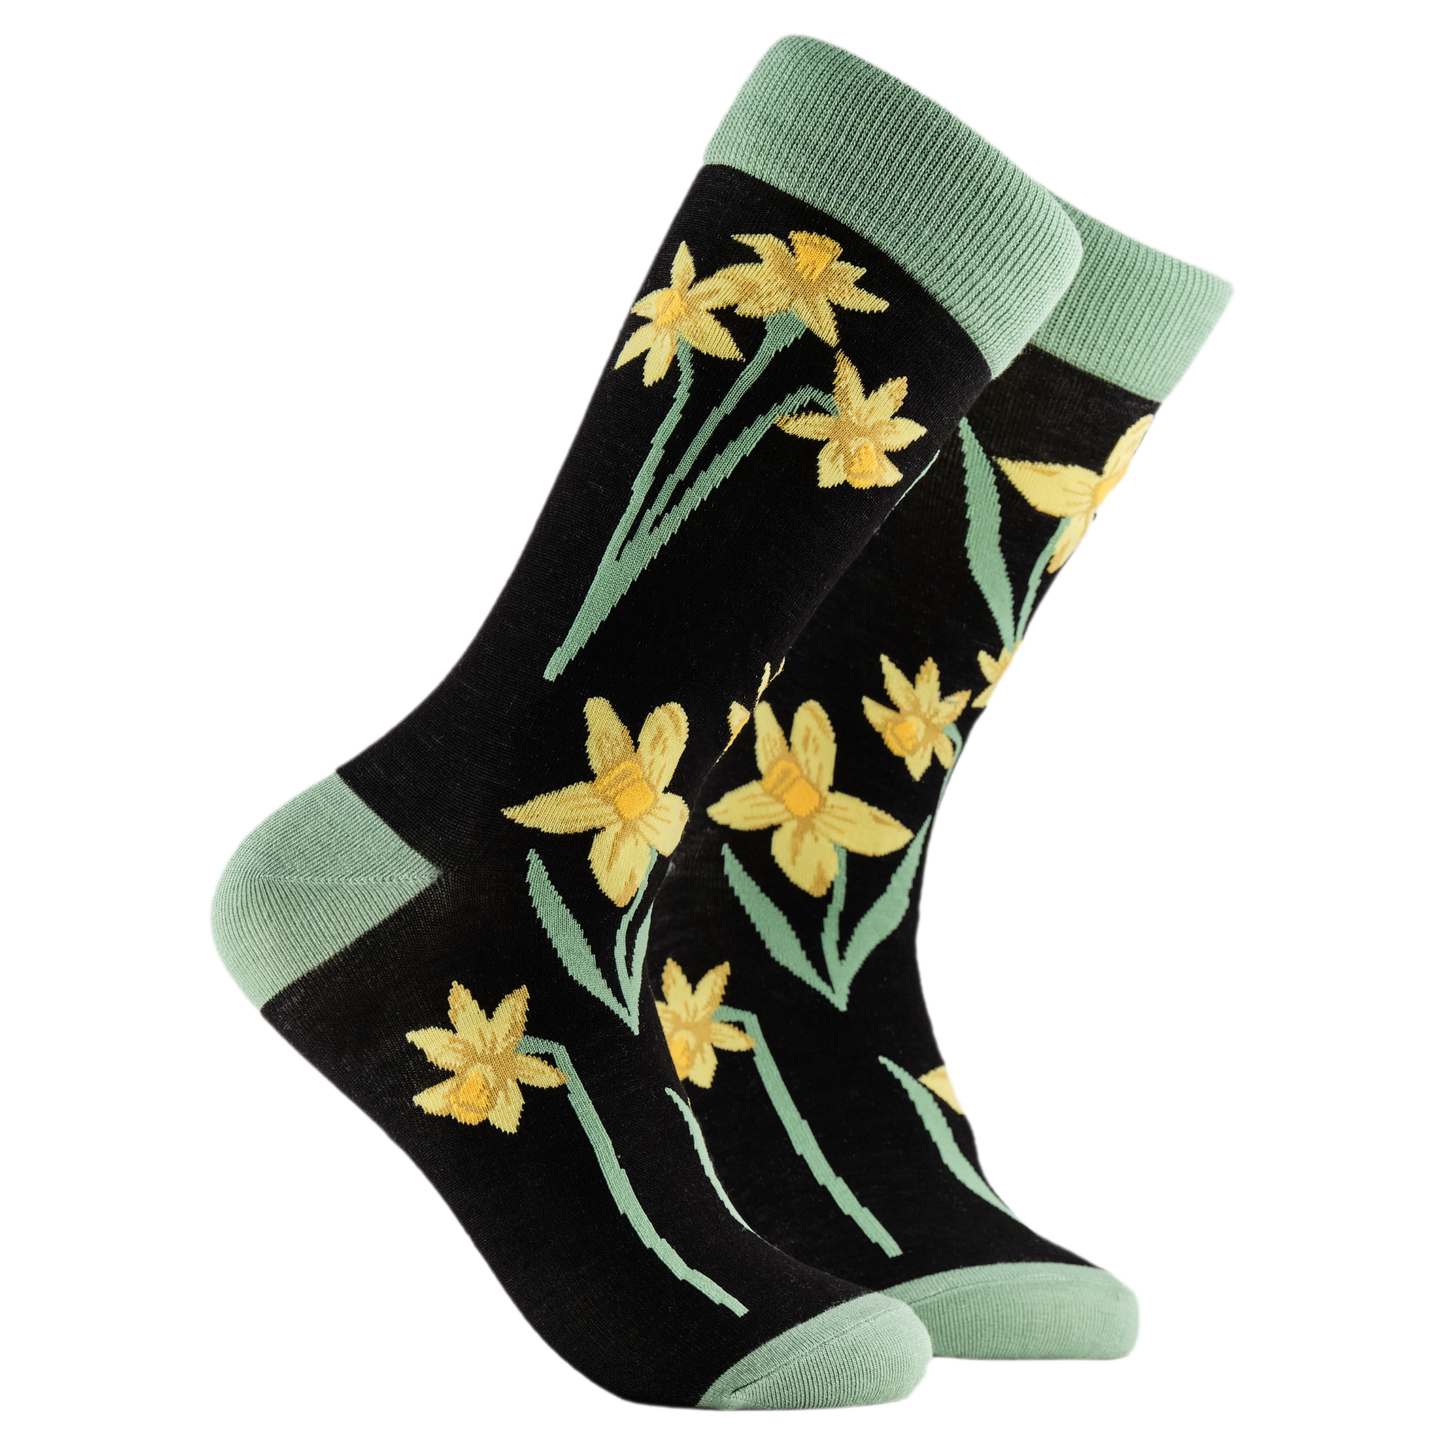 Daffodils Floral Bamboo Socks. A pair of socks depicting daffodils. Black legs, light green cuff, heel and toe.